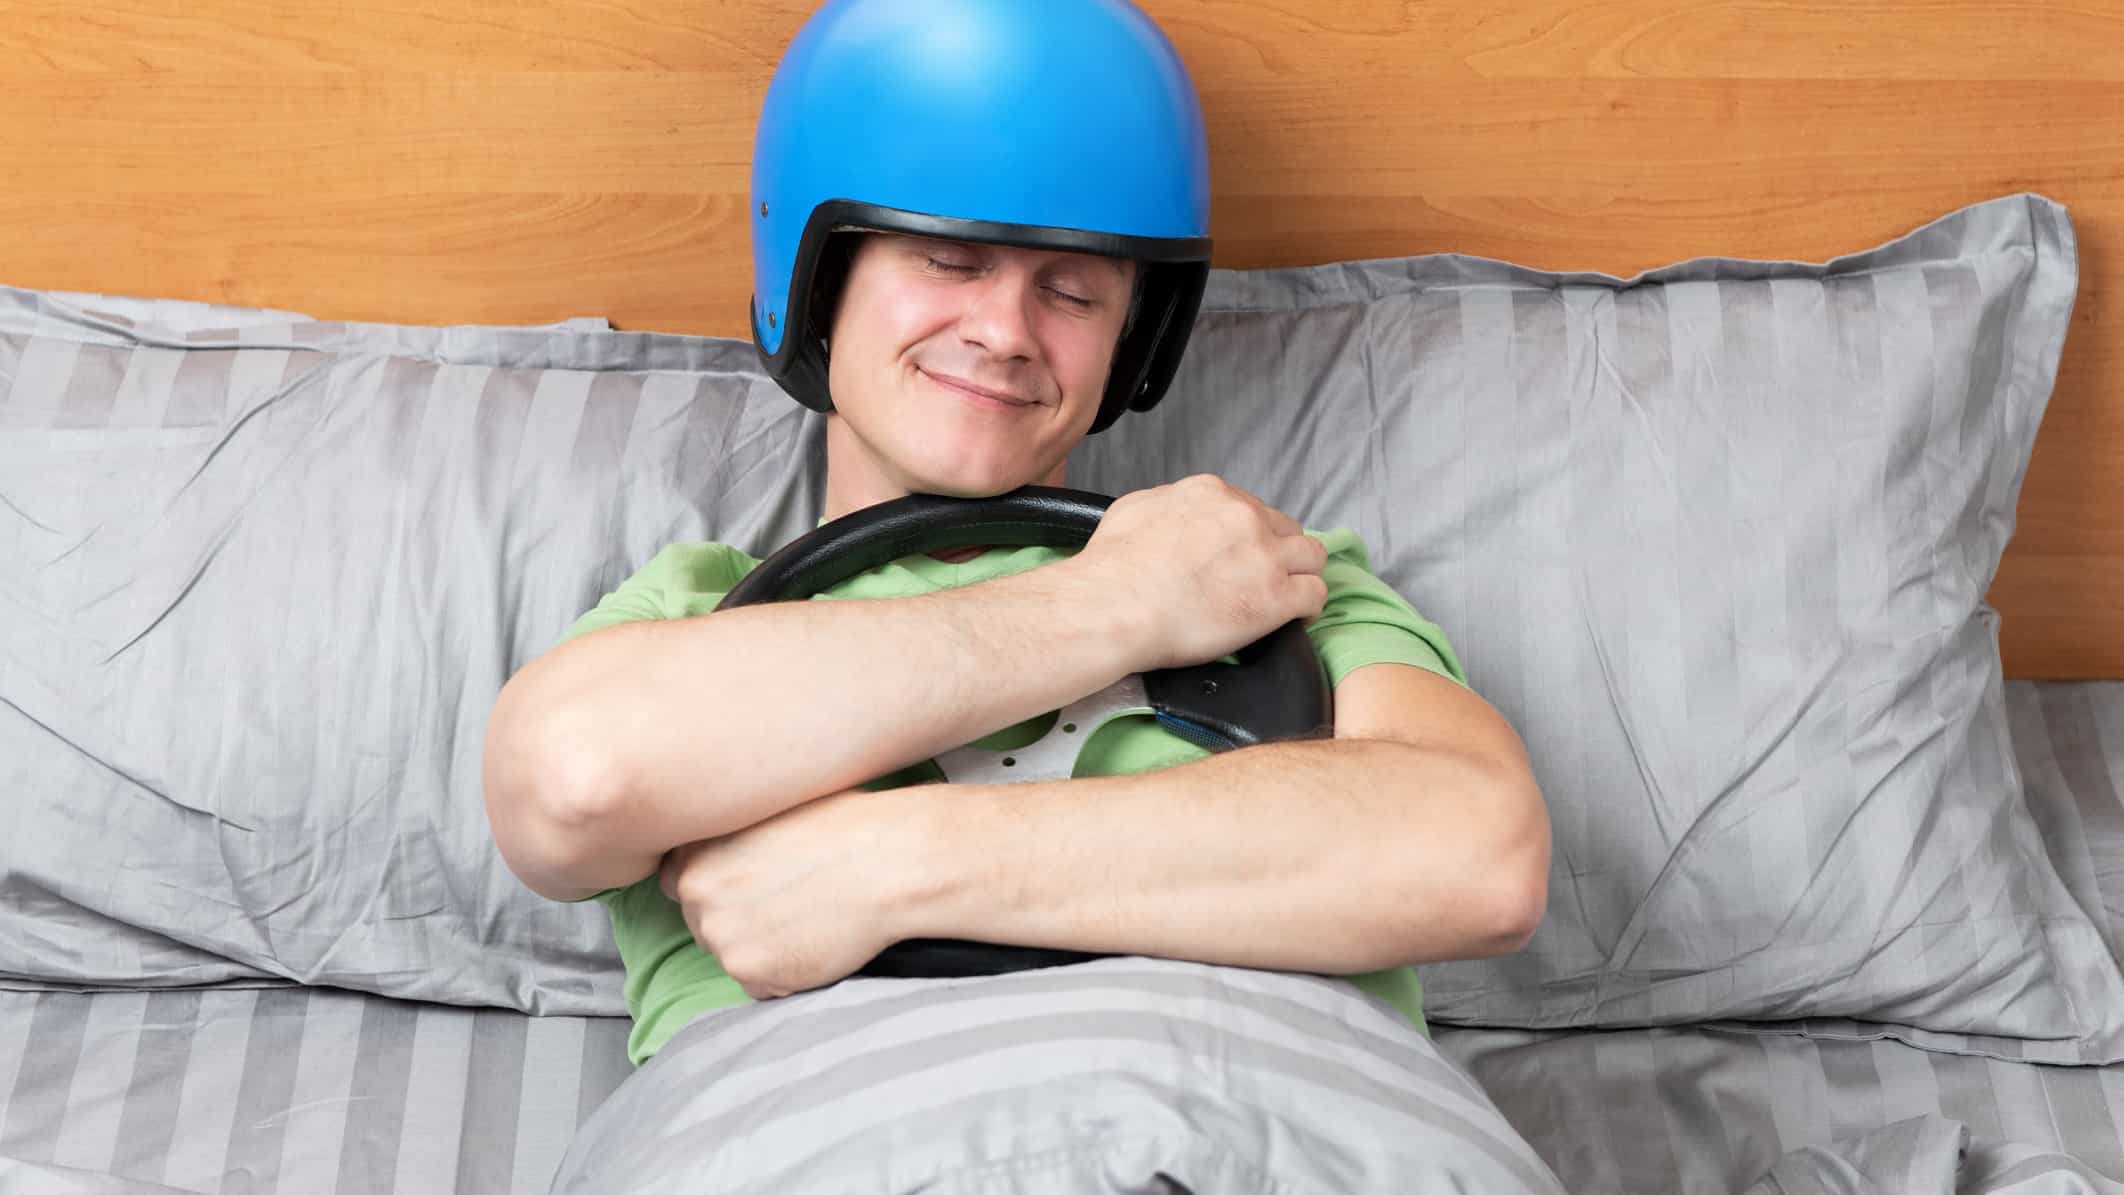 A smiling man falls asleep wearing a racing helmet and hugging a steering wheel